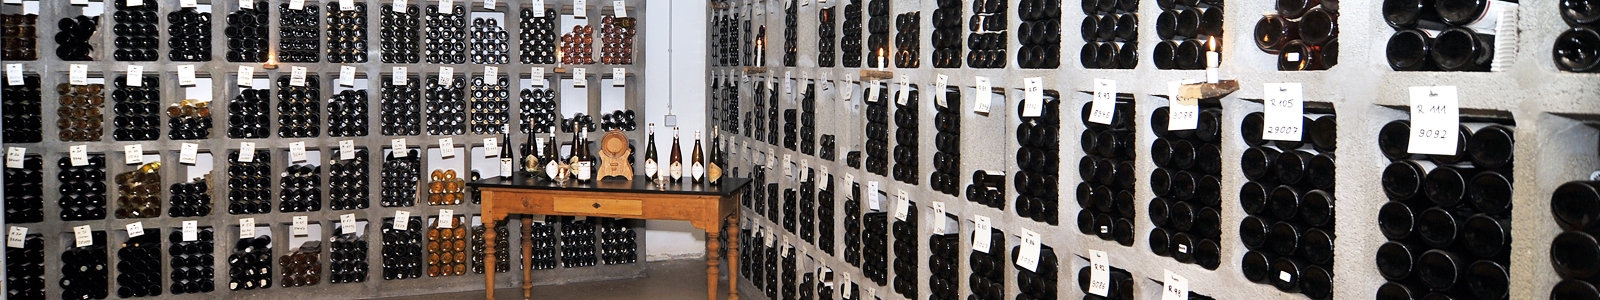 Many Winebottles on the sales shelf ©DLR